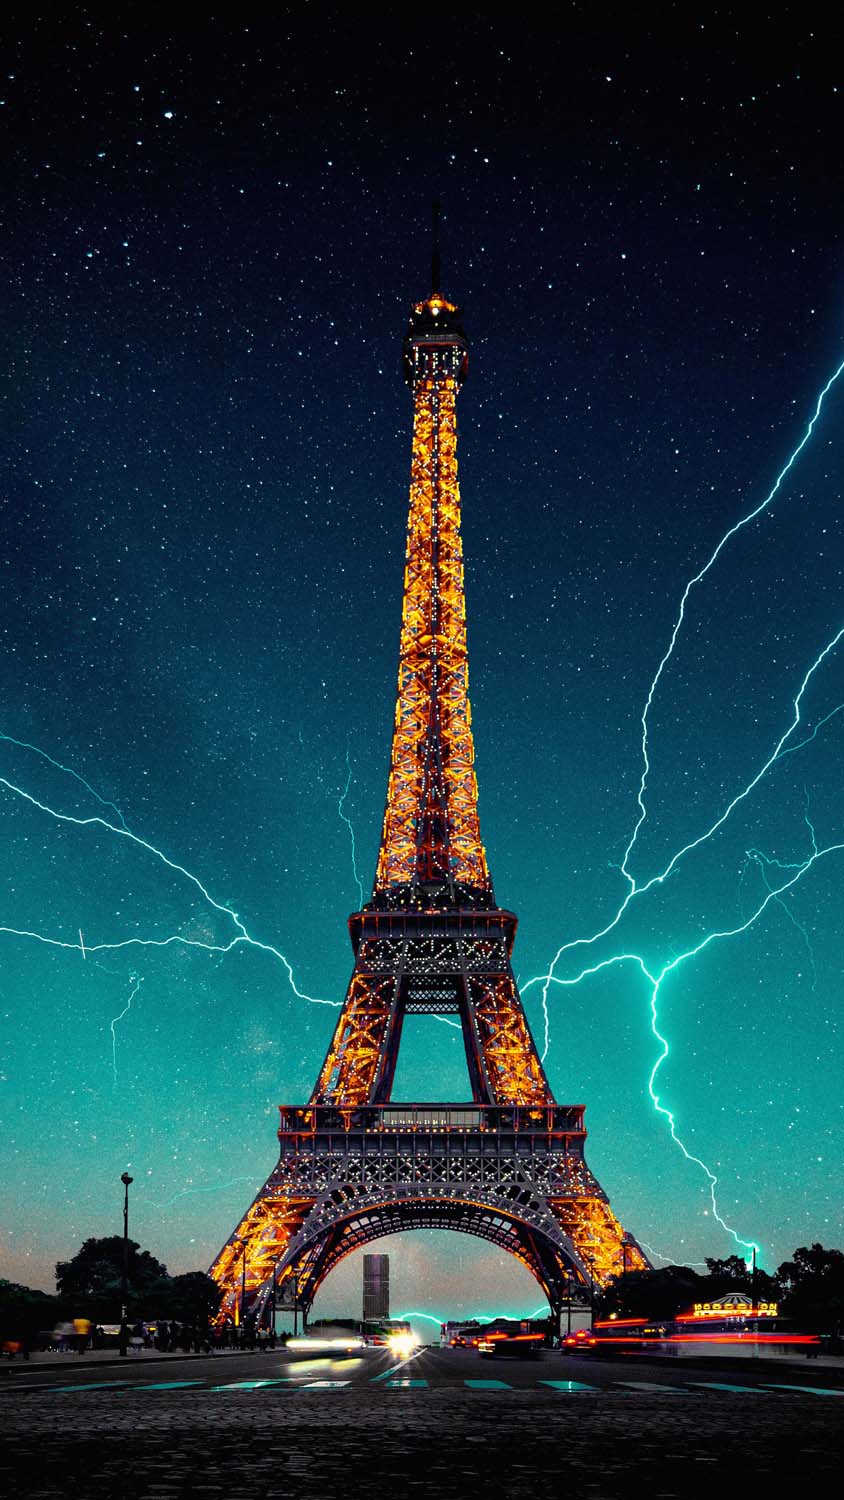 Eiffel Tower Lightning Strikes IPhone Wallpaper HD - IPhone Wallpapers : iPhone  Wallpapers